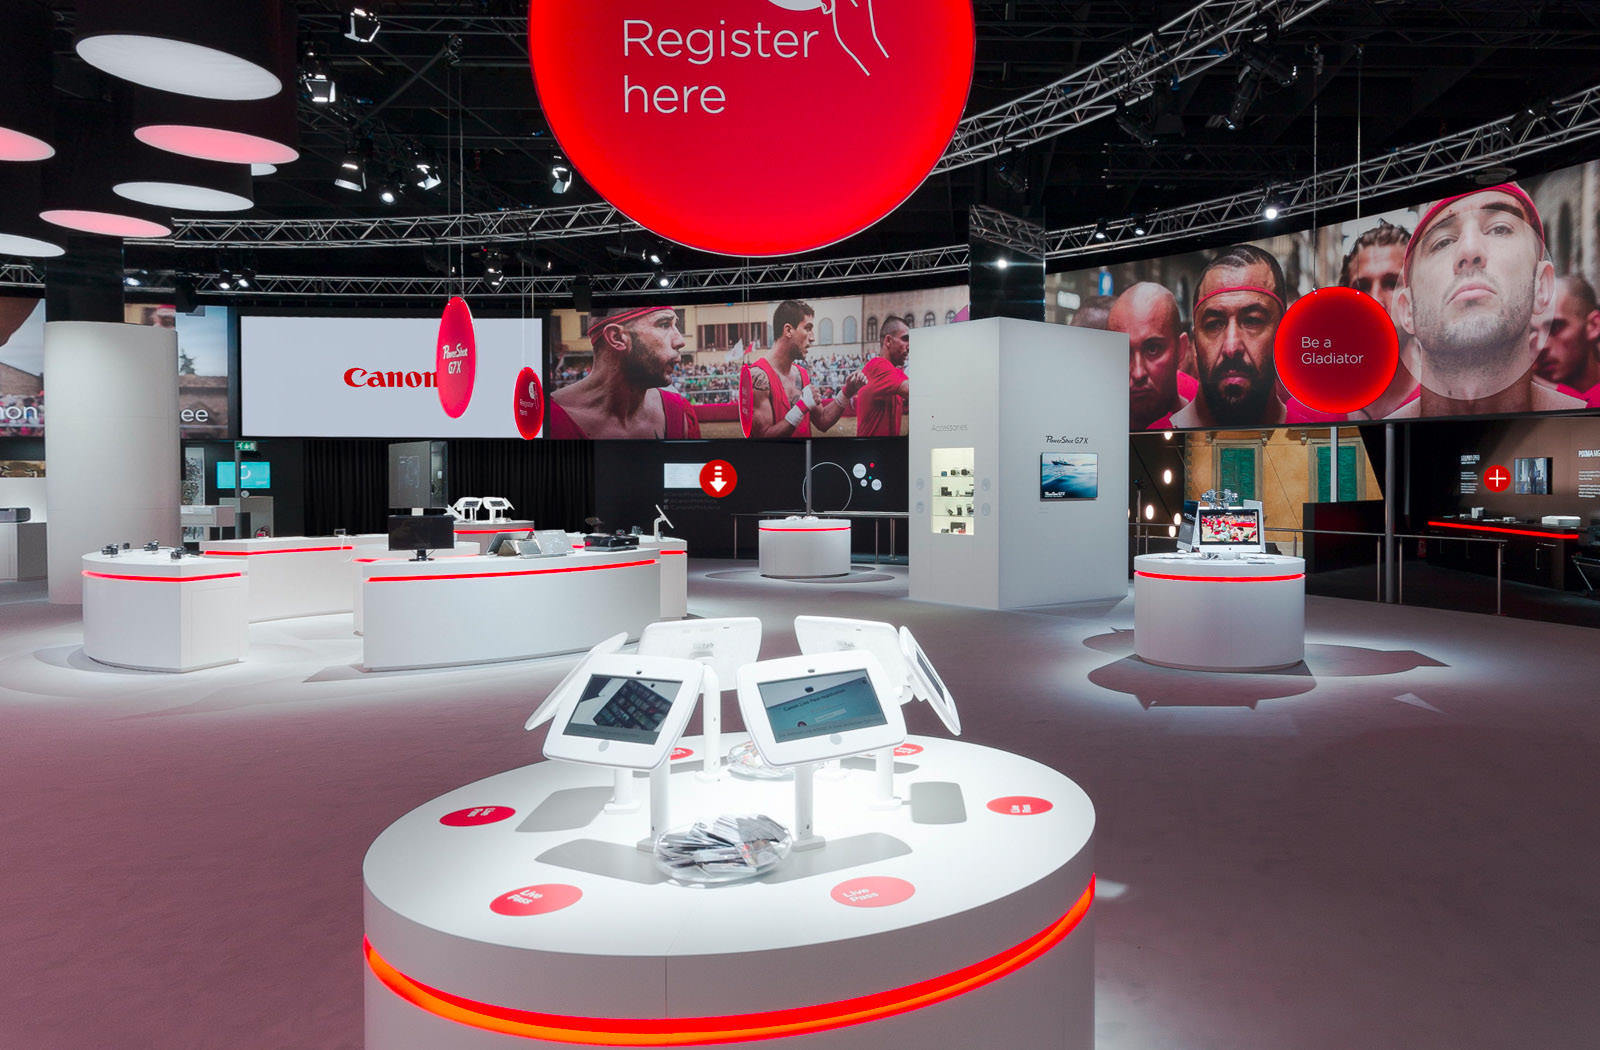 Canon Stand Virtual Tour at Photokina 2014